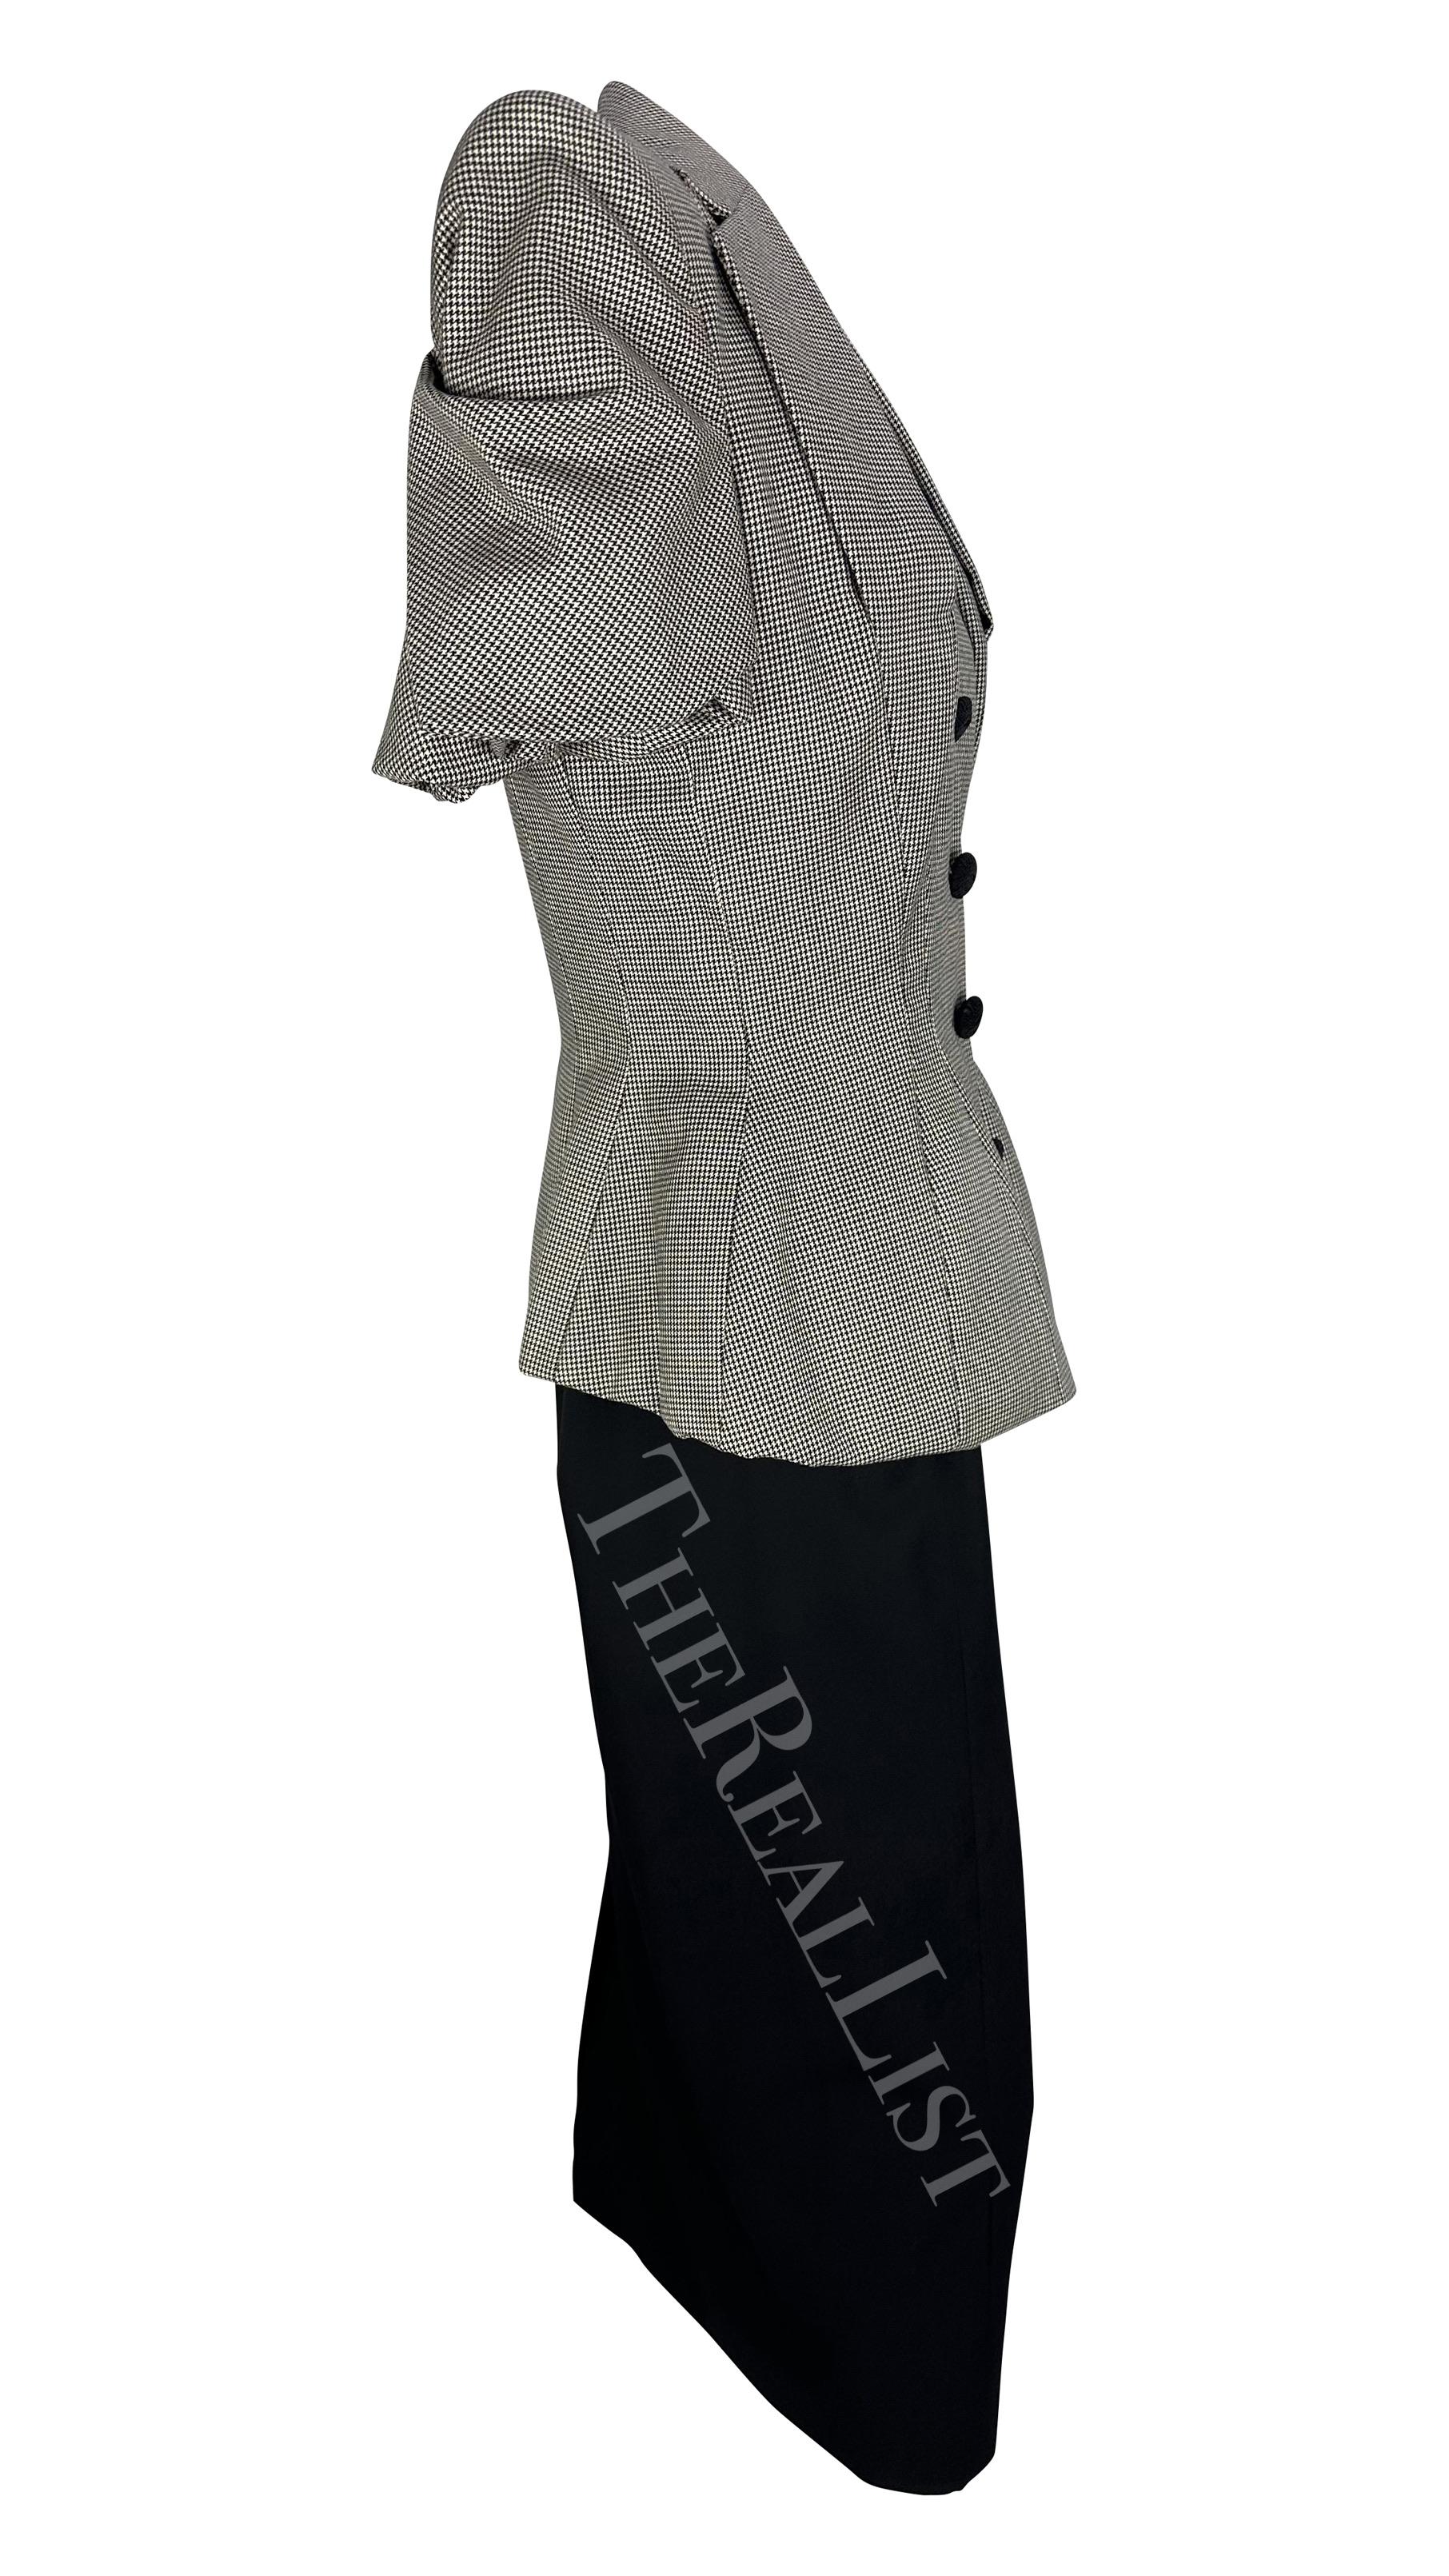 S/S 1995 John Galliano Runway Pin-Up Black Dress Houndstooth Blazer Set For Sale 7